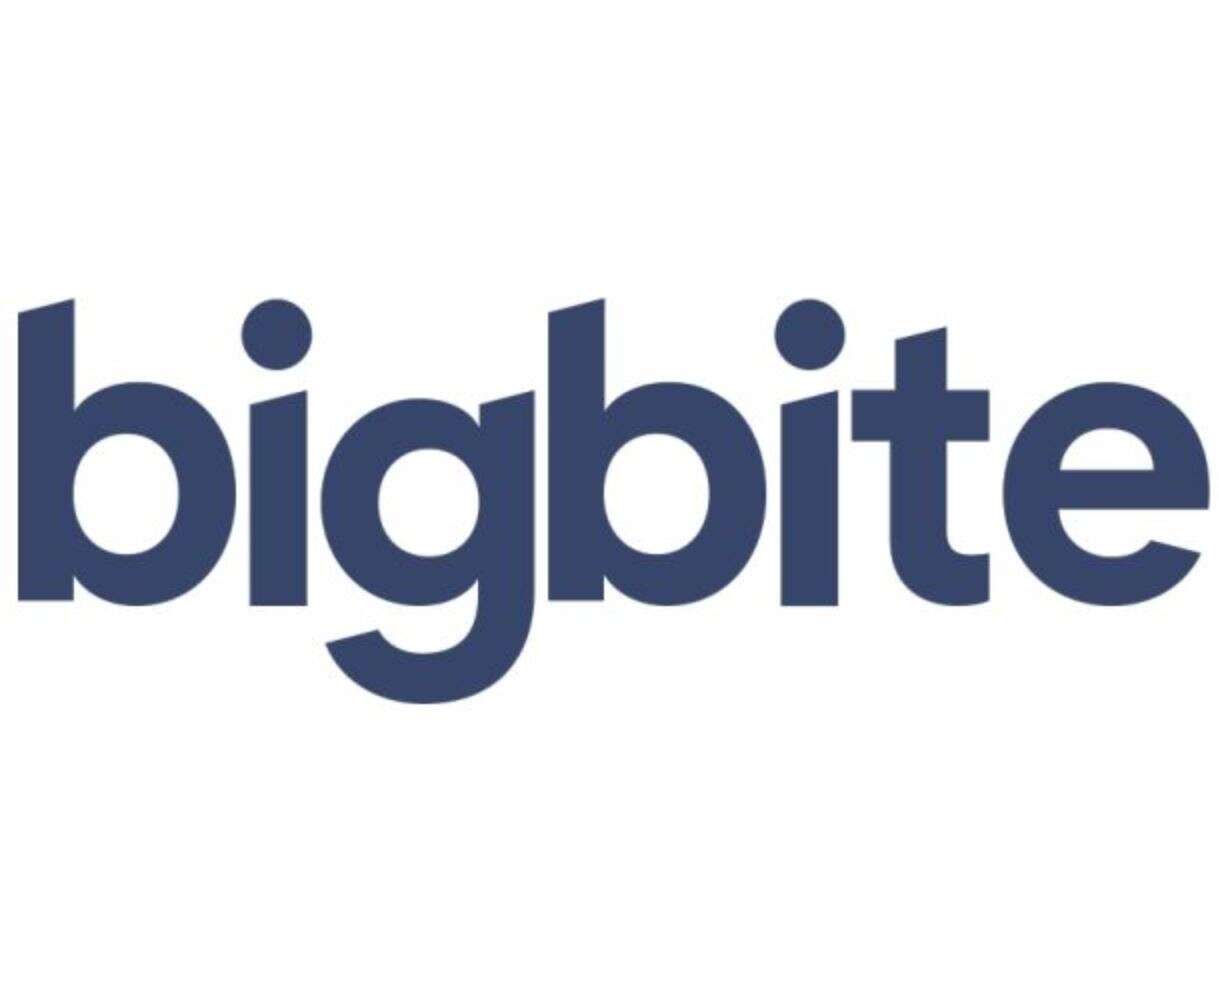 Big Bite provides Wordpress solutions for publishers